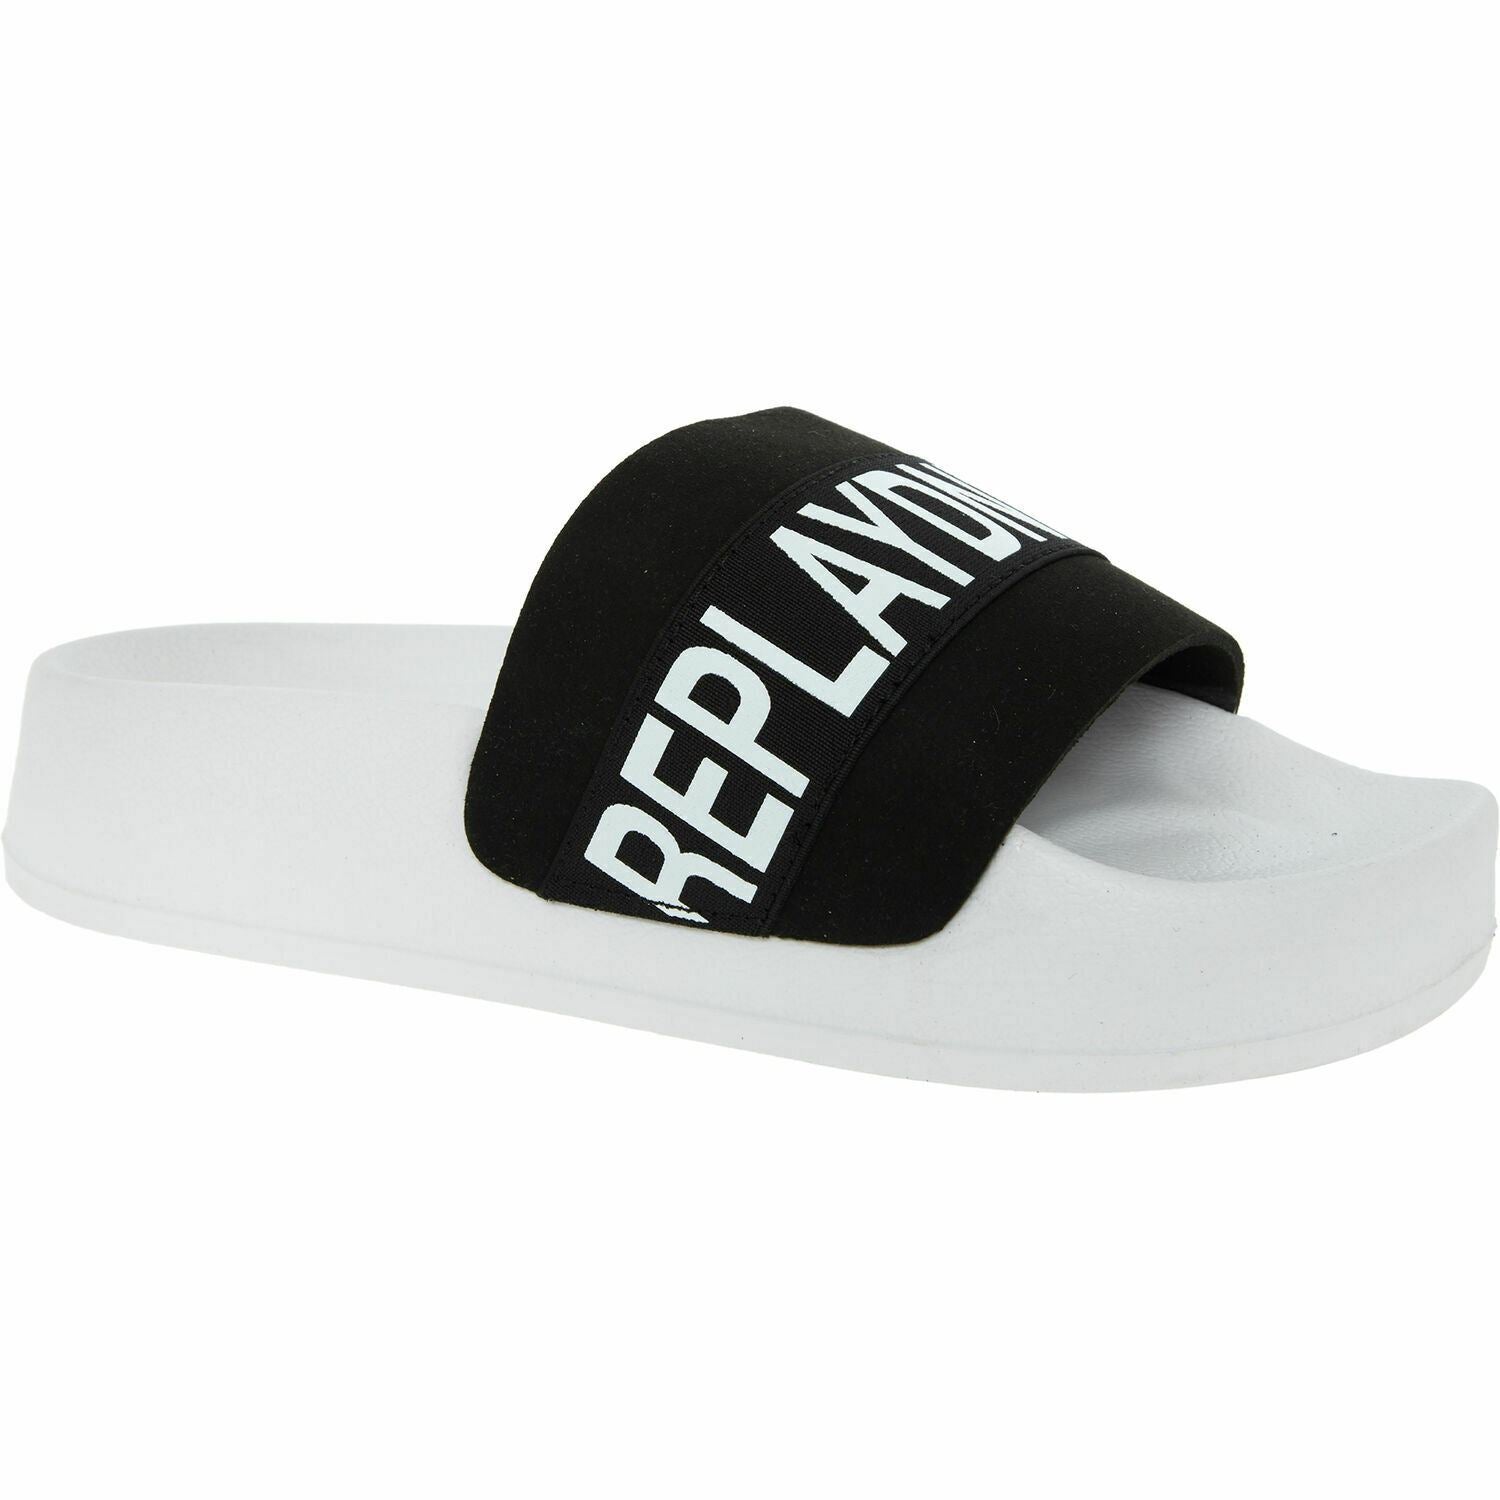 REPLAY Women's Black Logo Sliders, Sandals, size UK 7 / EU 40